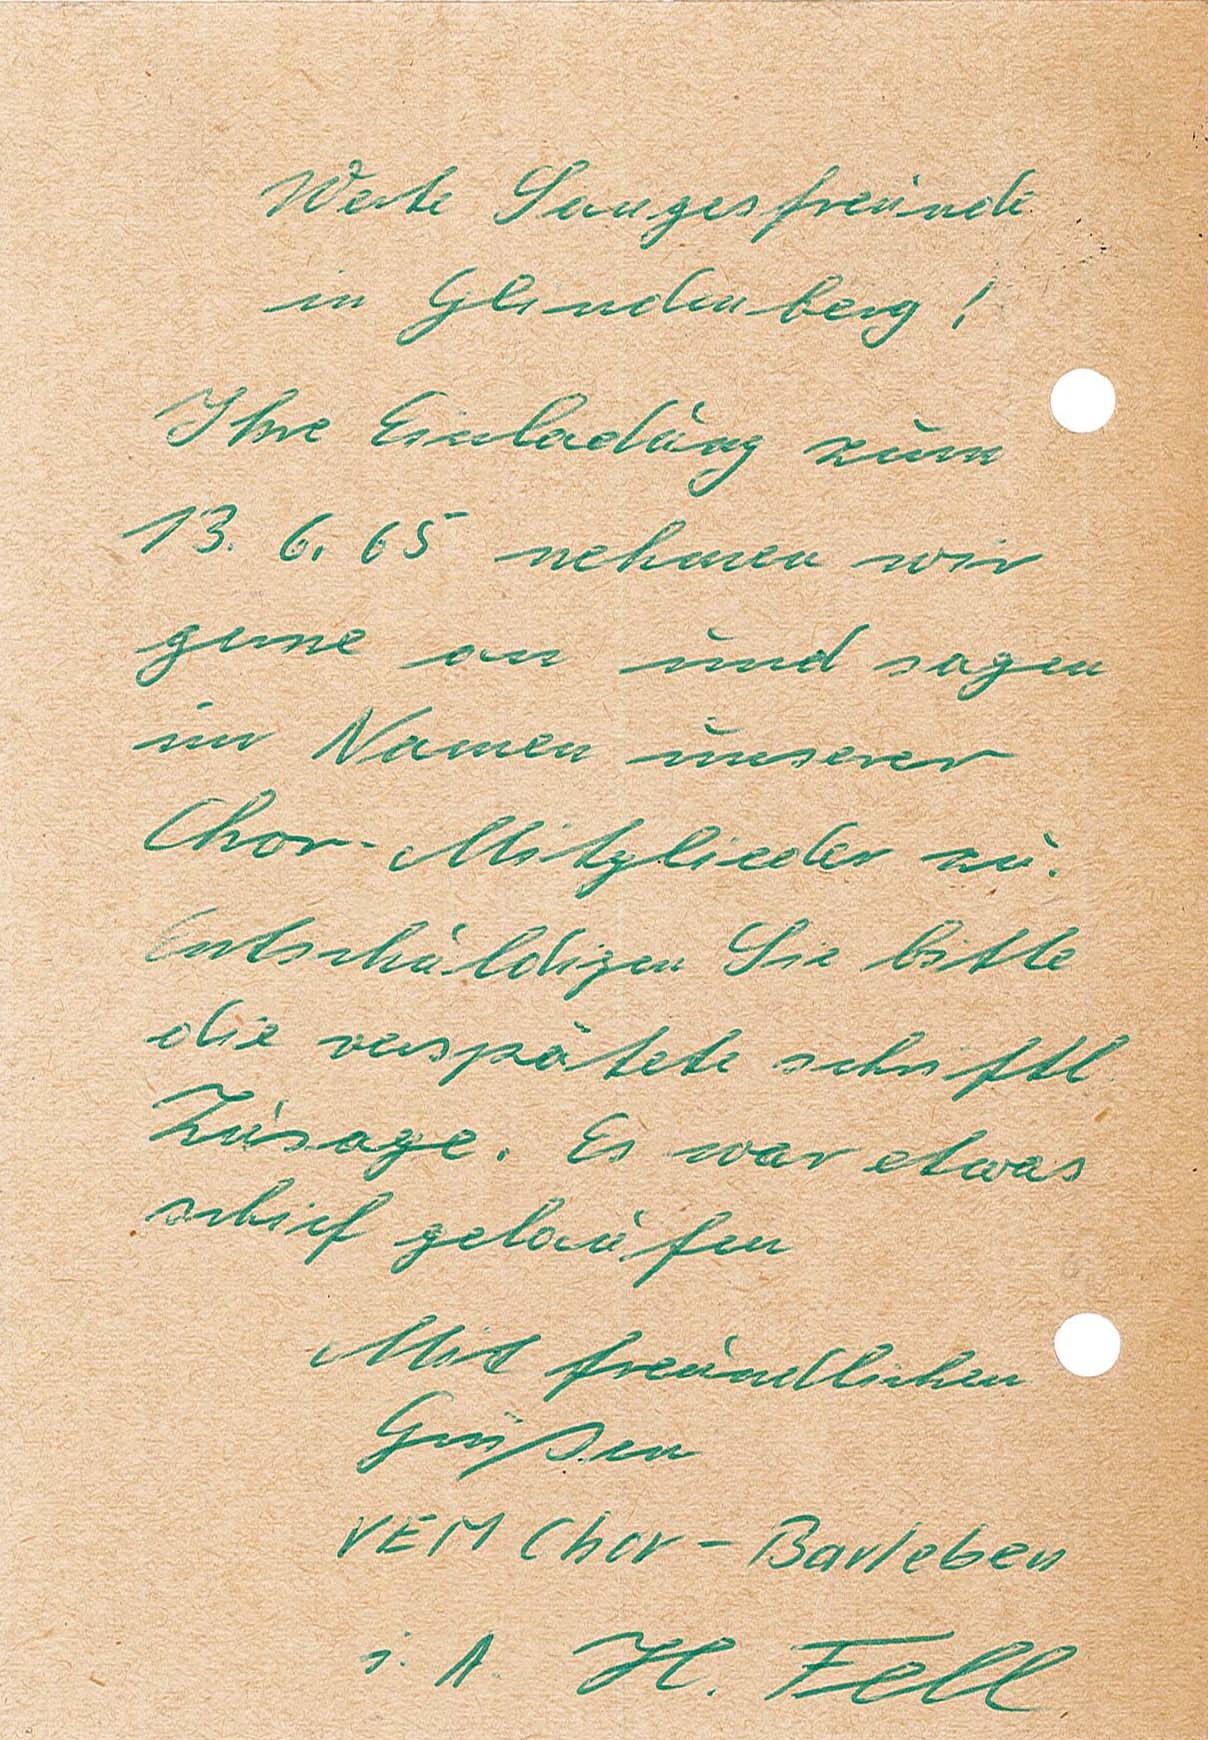 Postkarte an den Männer-Gesang-Verein Glindenberg, 22.04.1965 (Museum Wolmirstedt RR-F)